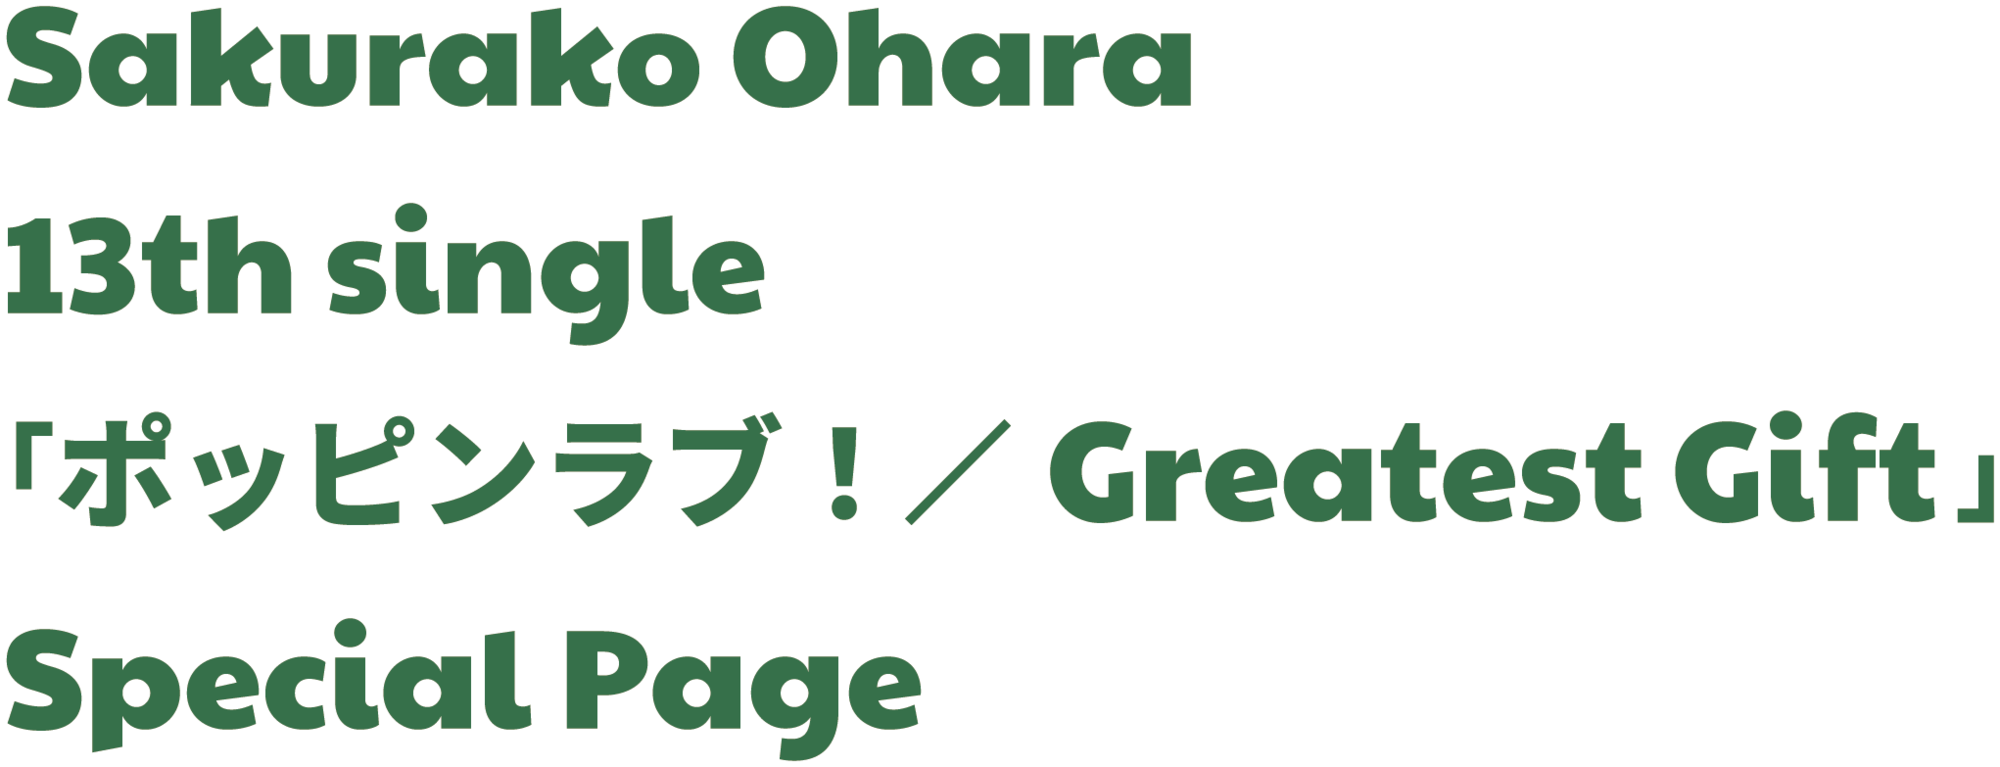 Sakurako Ohara 13th single 「ポッピンラブ！／Greatest Gift」 Special Page